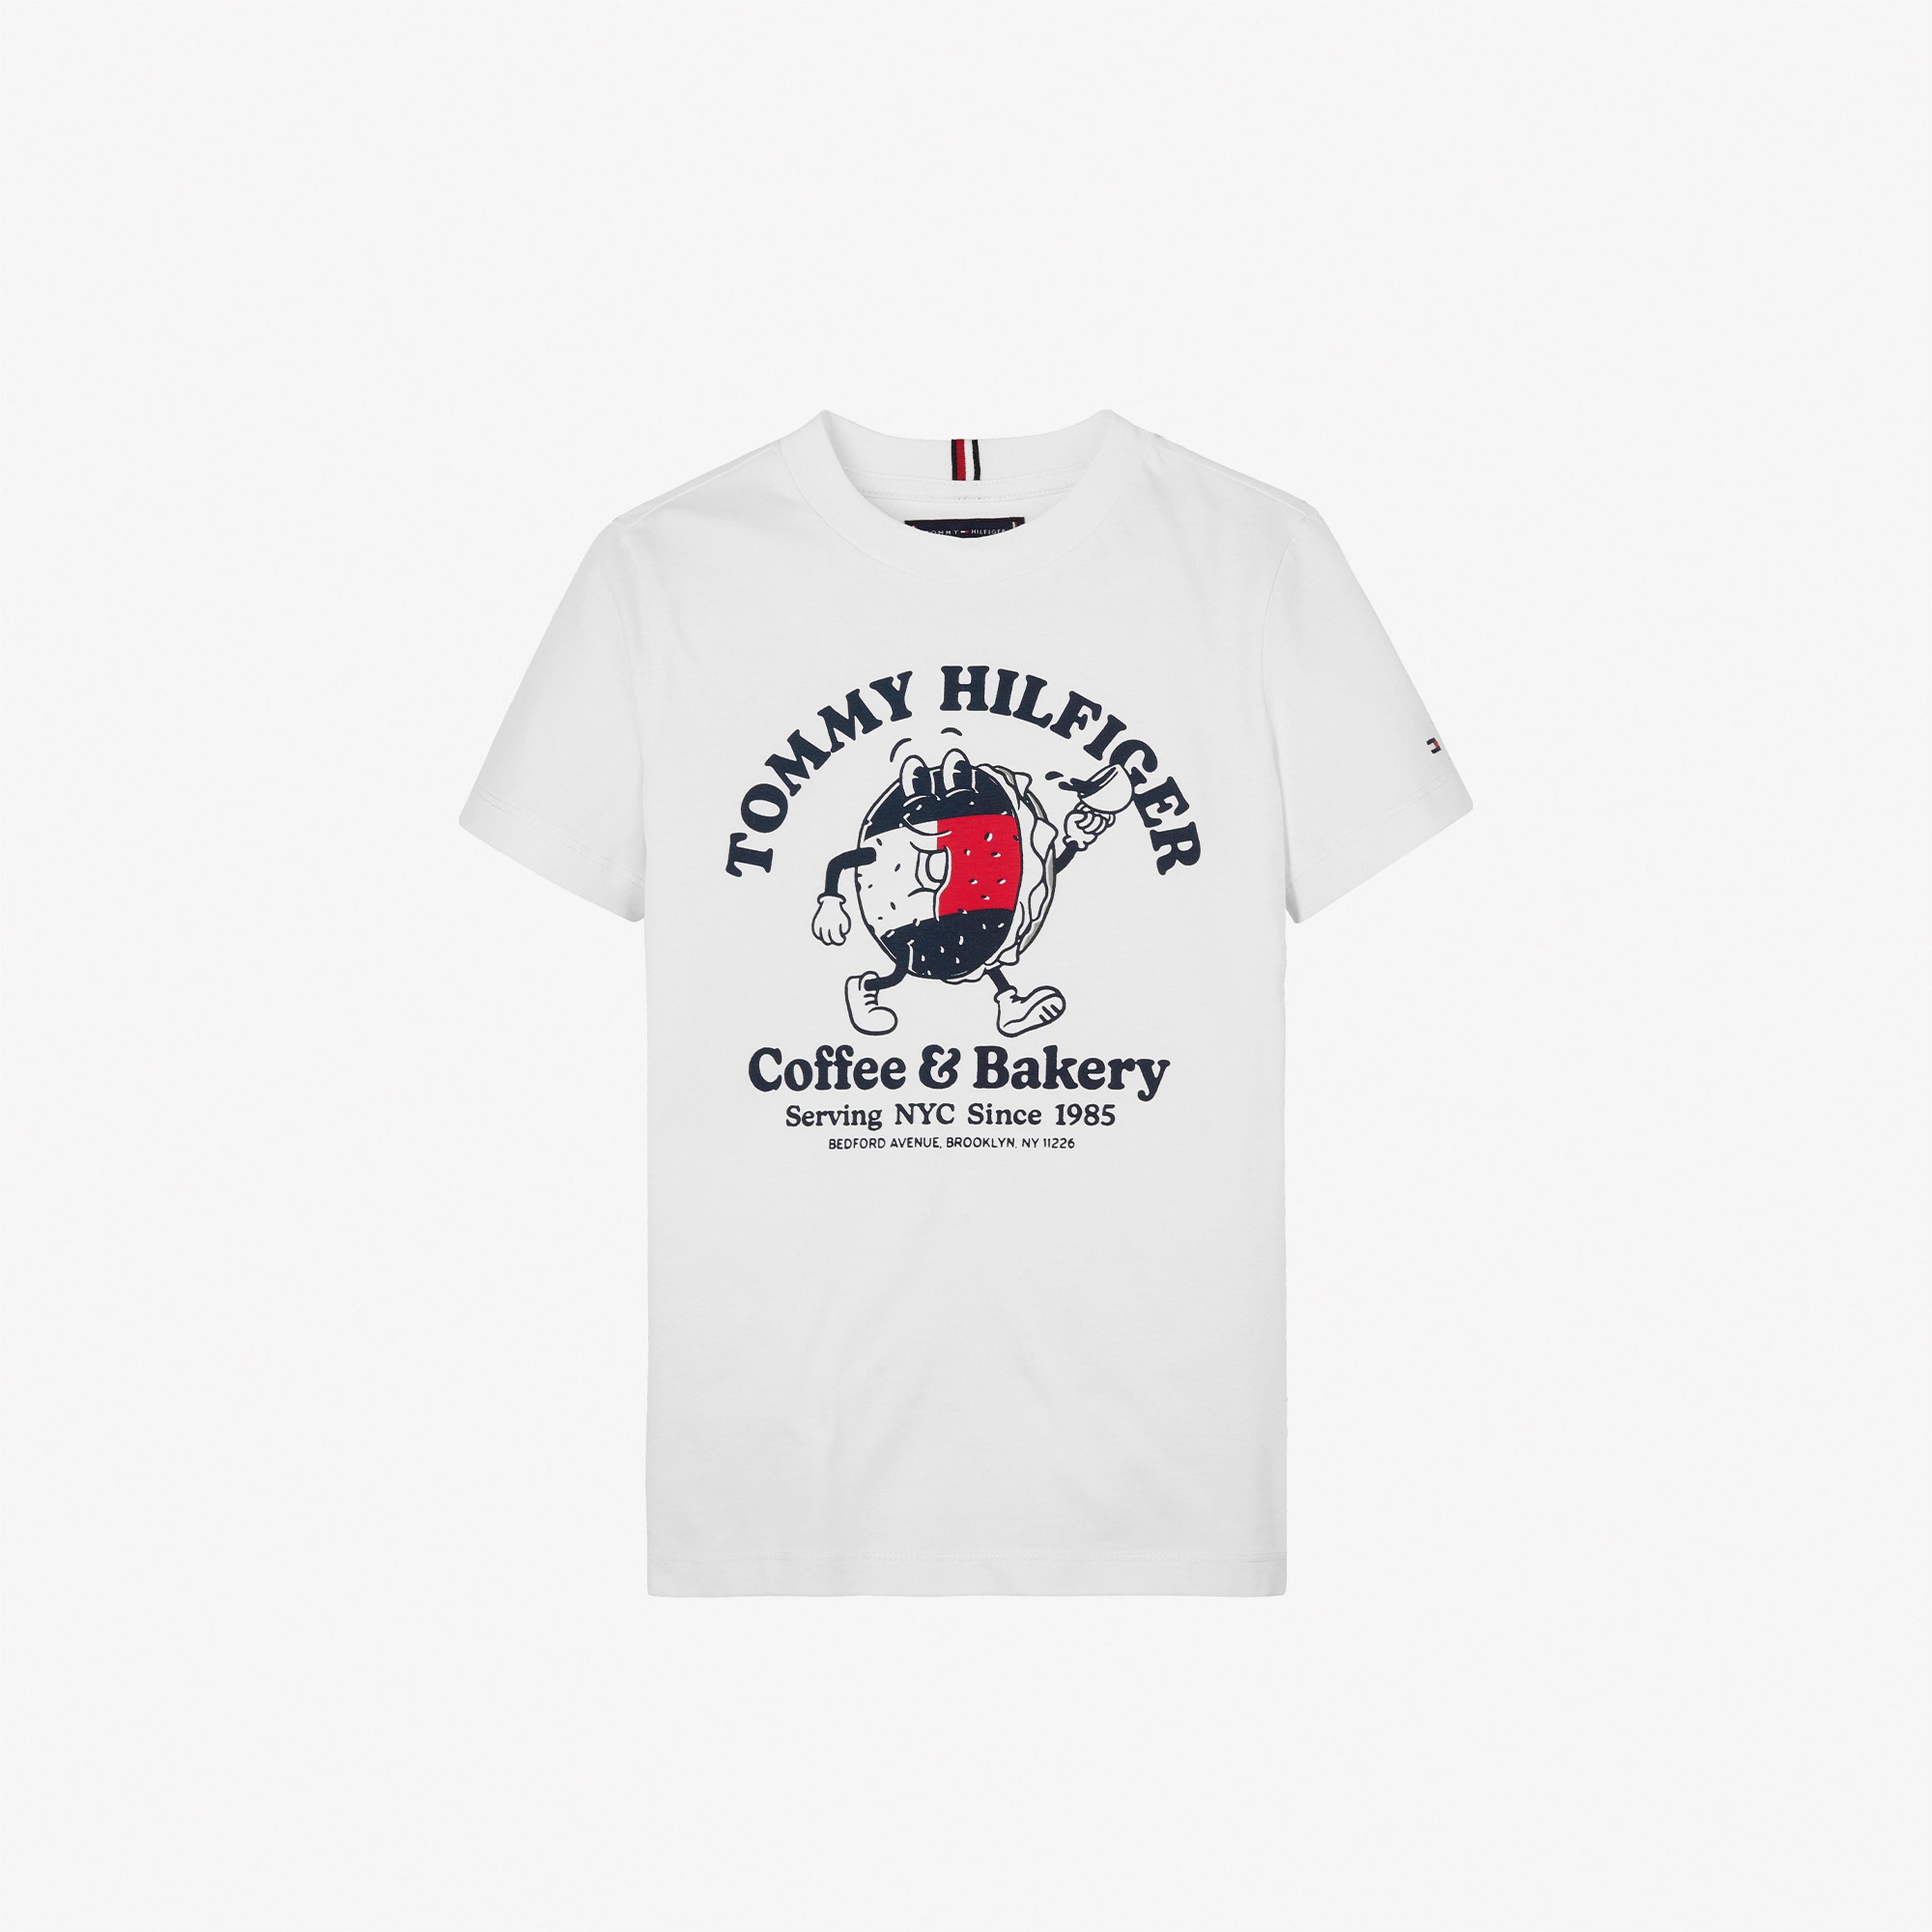 Tommy Hilfiger Bagels Erkek Çocuk Beyaz T-Shirt